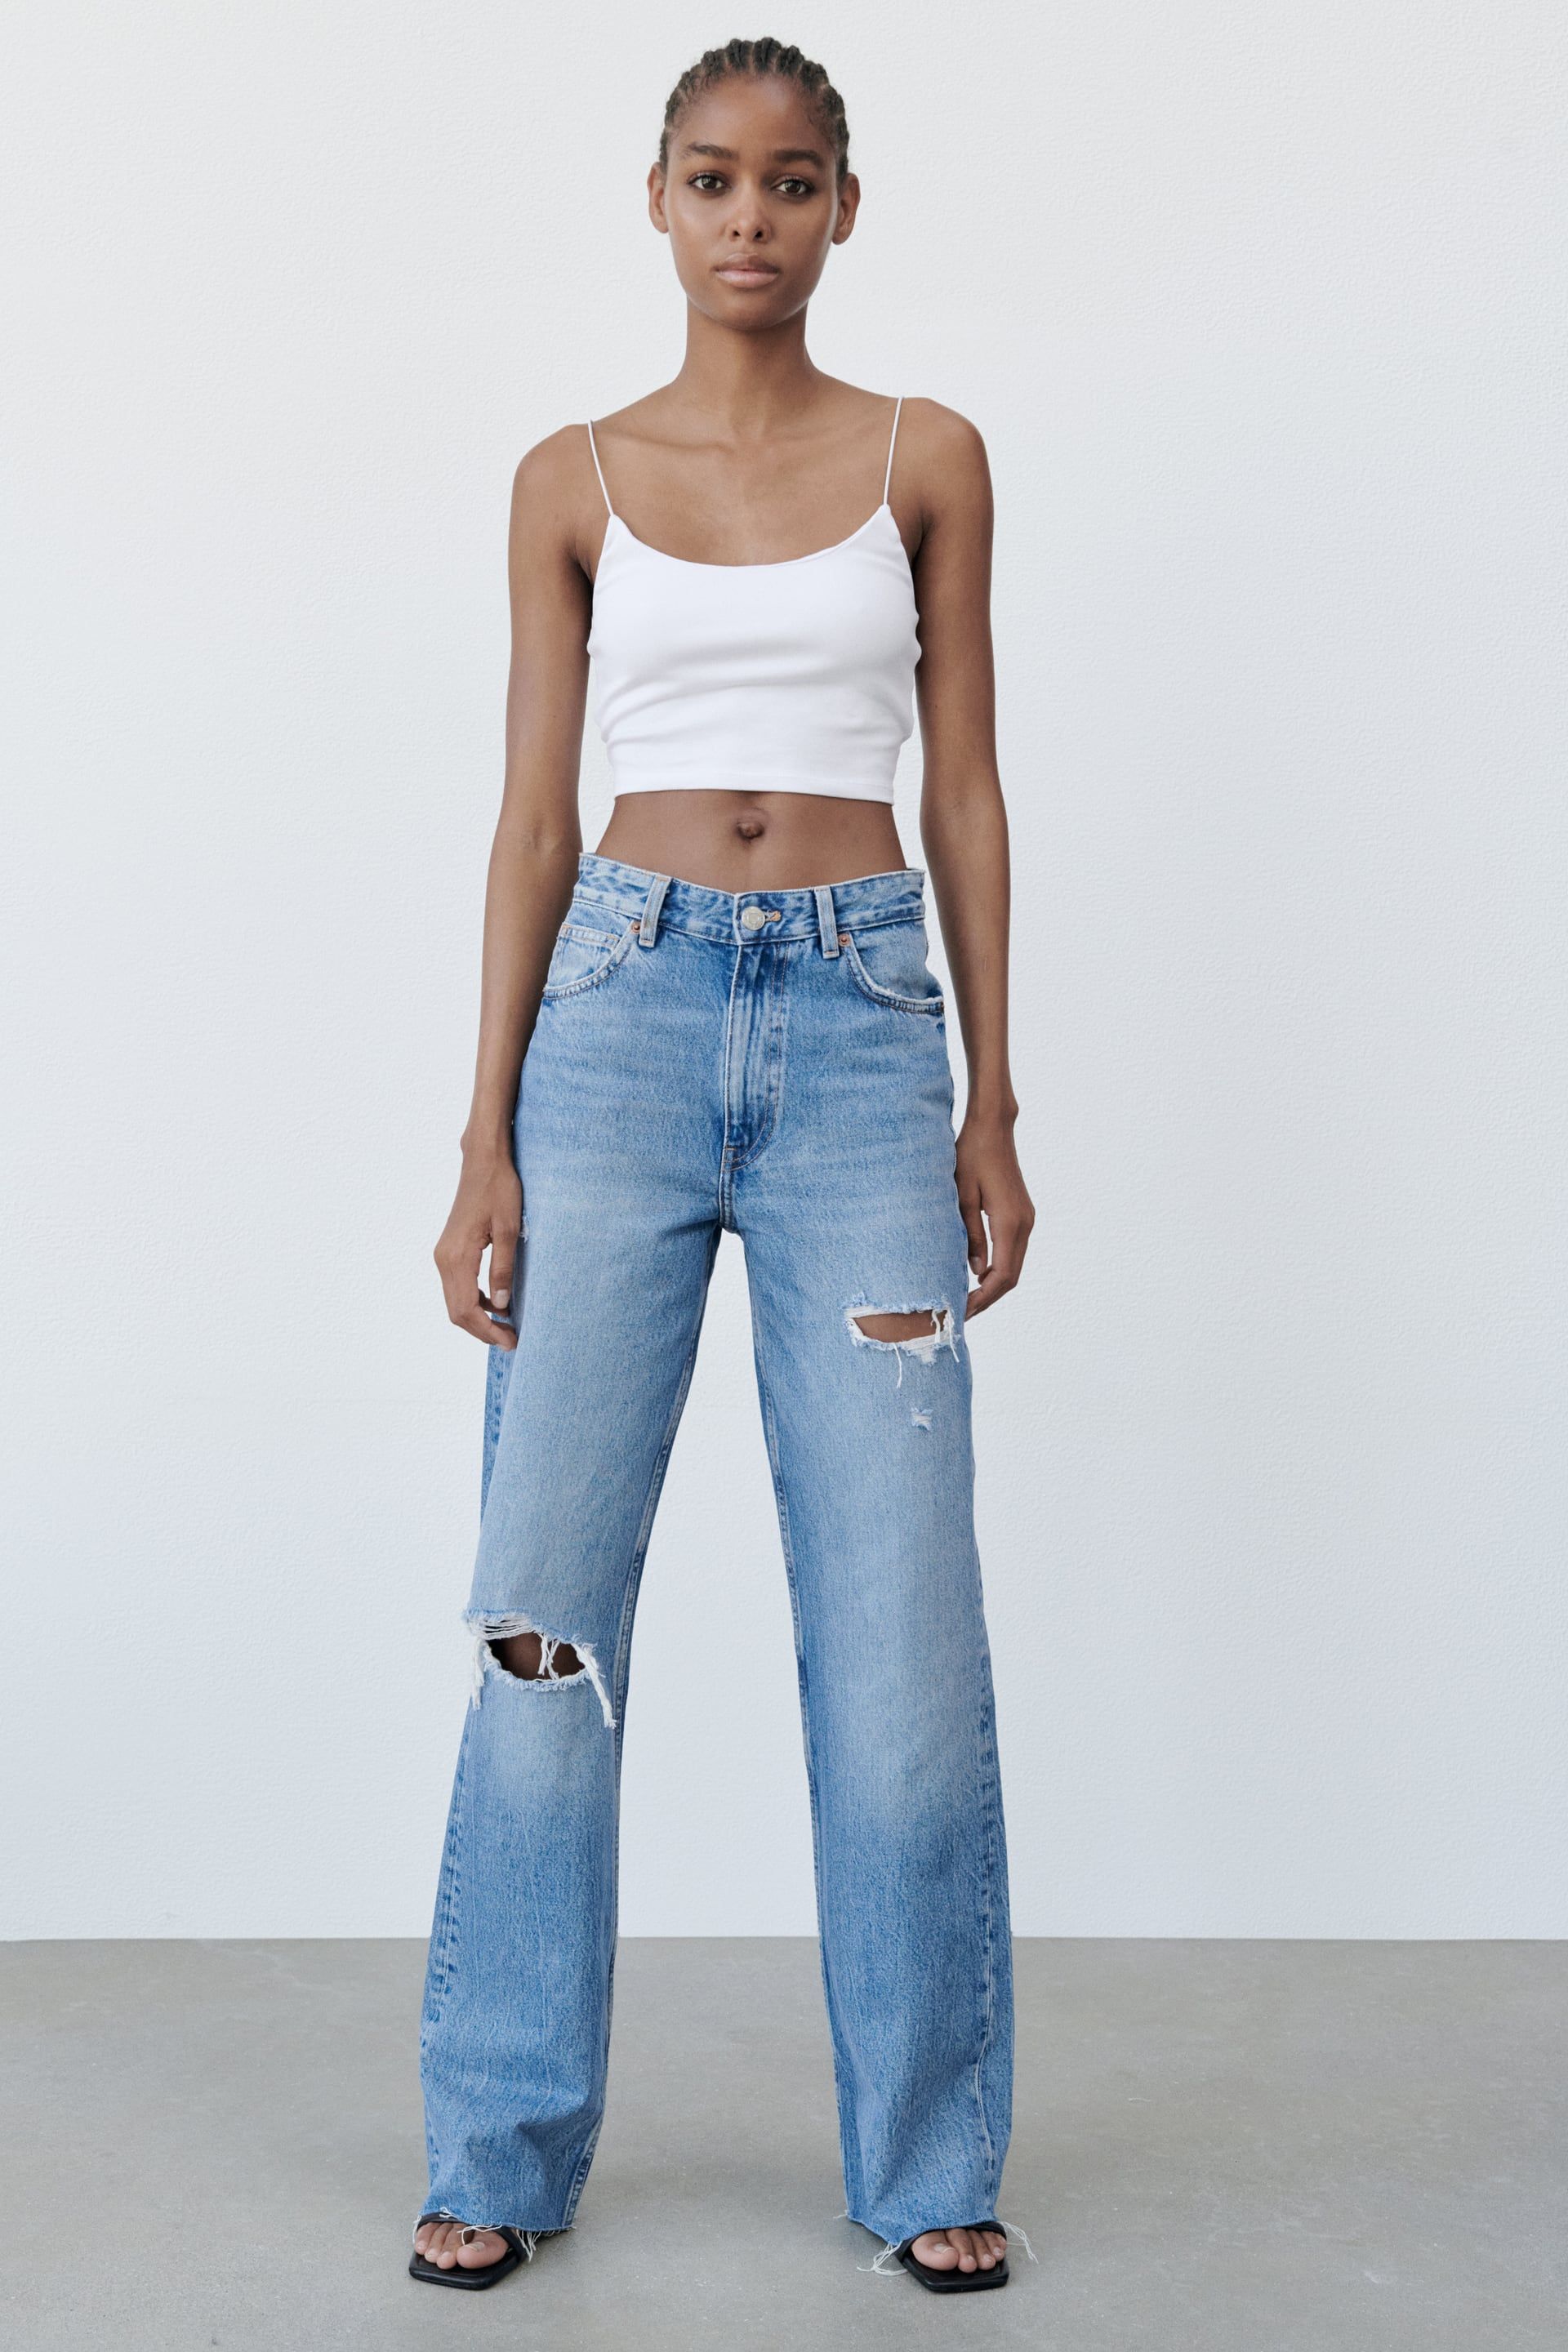 I Hate Skinny Jeans, so I’m Very Into These Gen Z Denim Trends